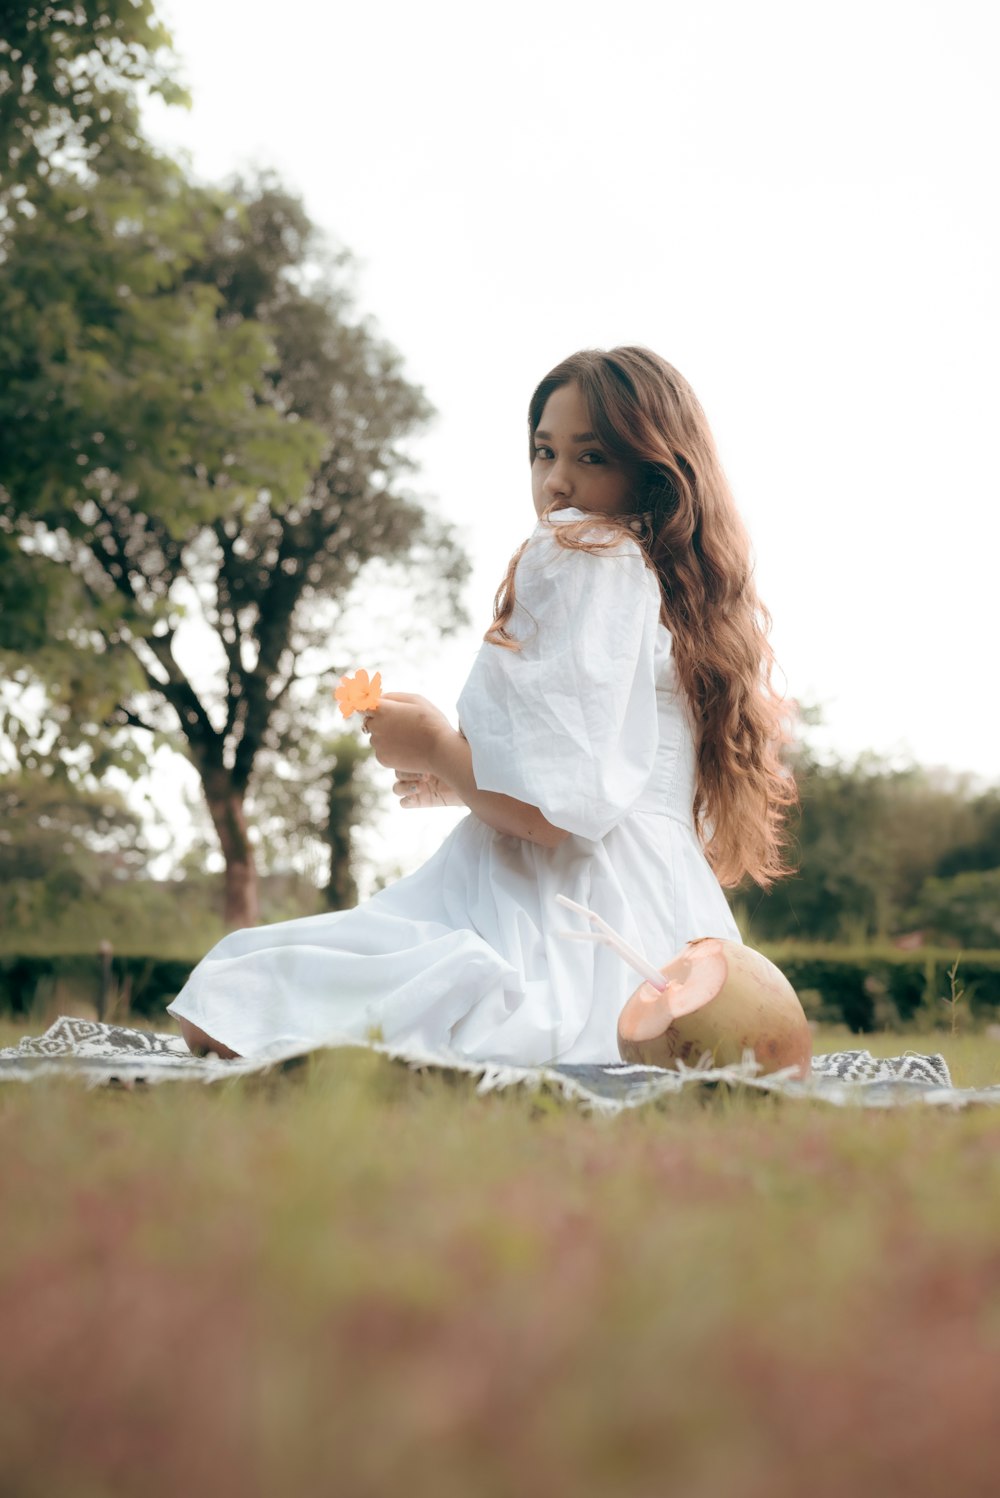 a girl in a white dress sitting in a field